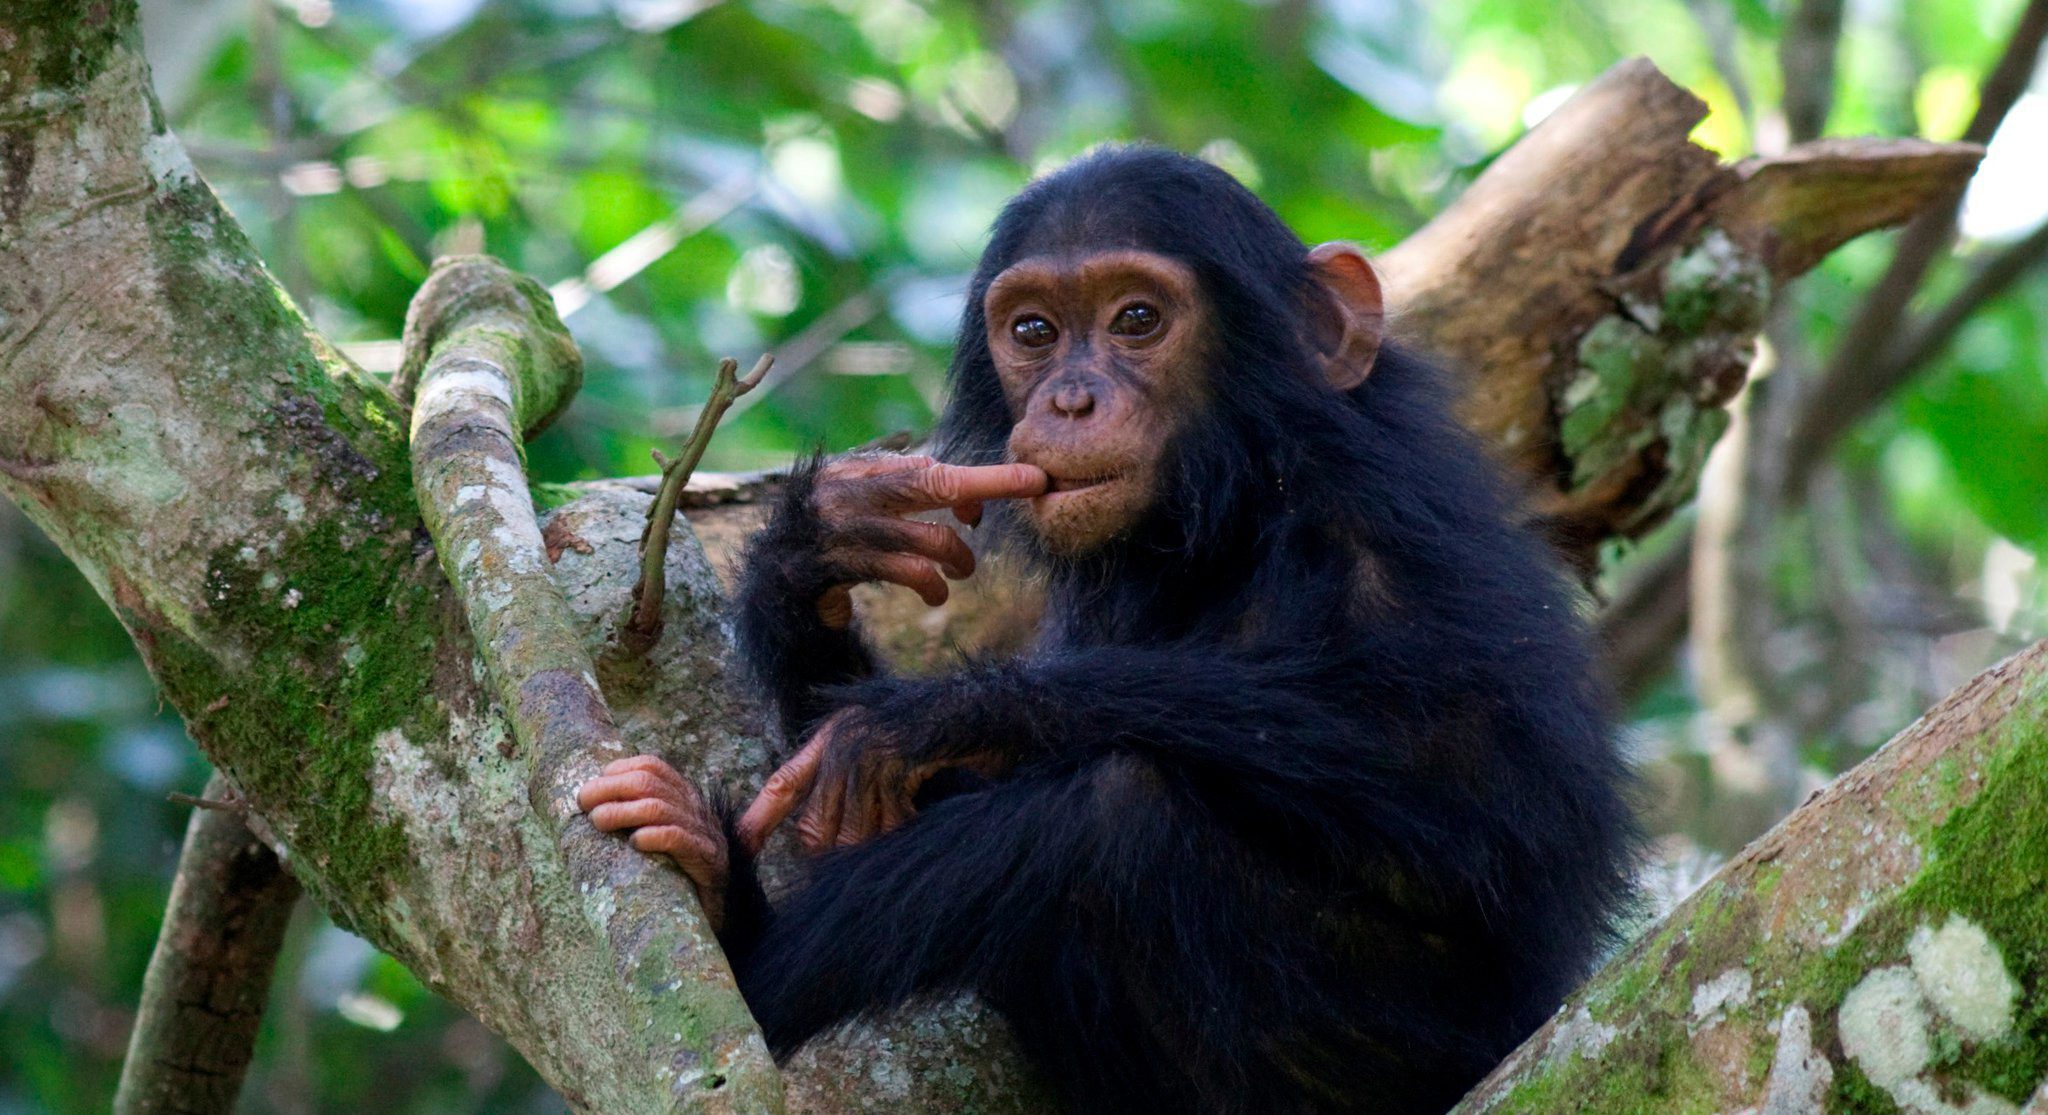 chimpanzee baby in a tree seen on a chimpanzee trek in Africa